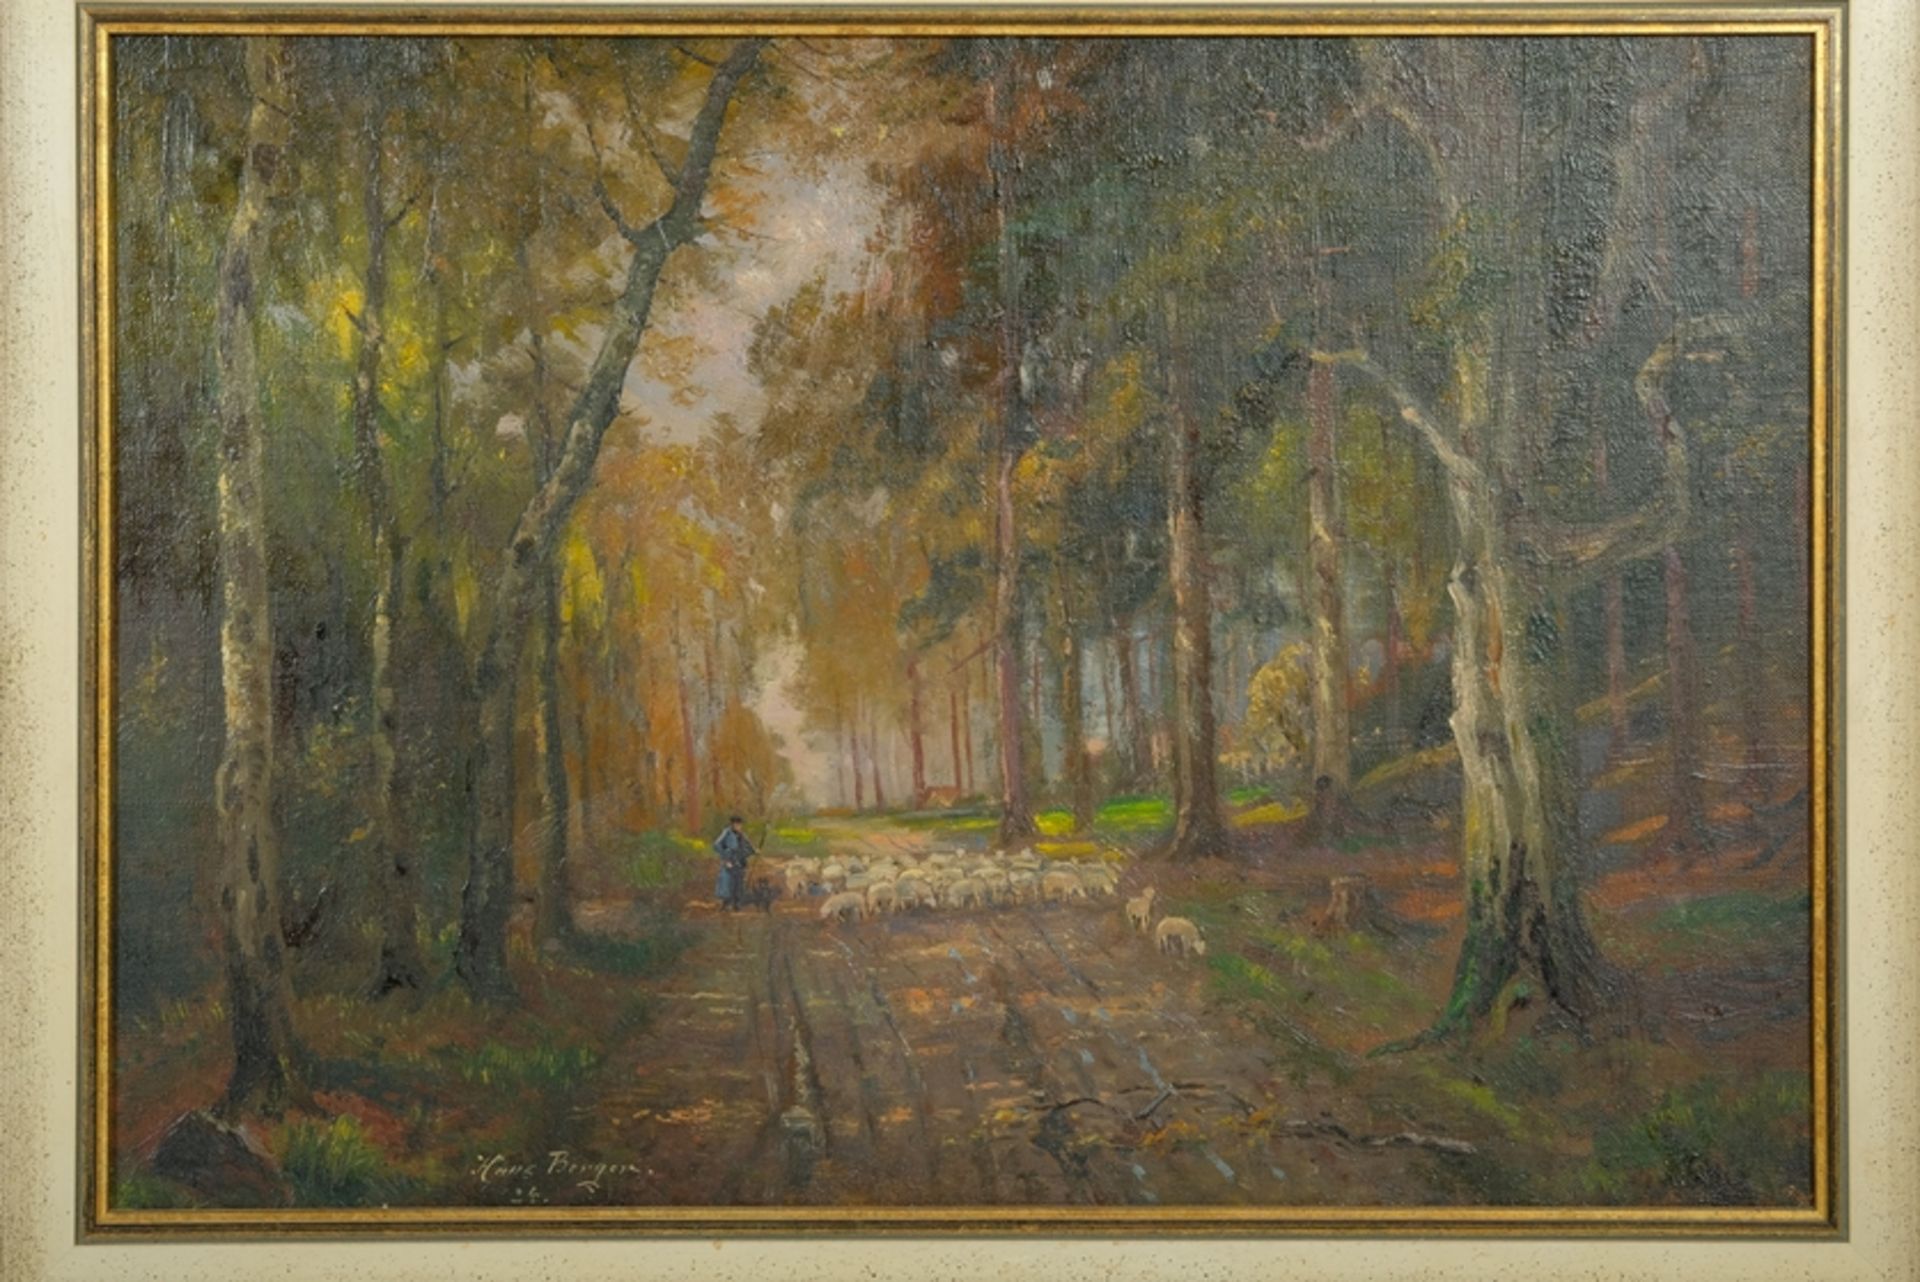 Berger, Hans (1882-1977) Shepherd scene in the forest, oil on canvas / cardboard, 1924. 